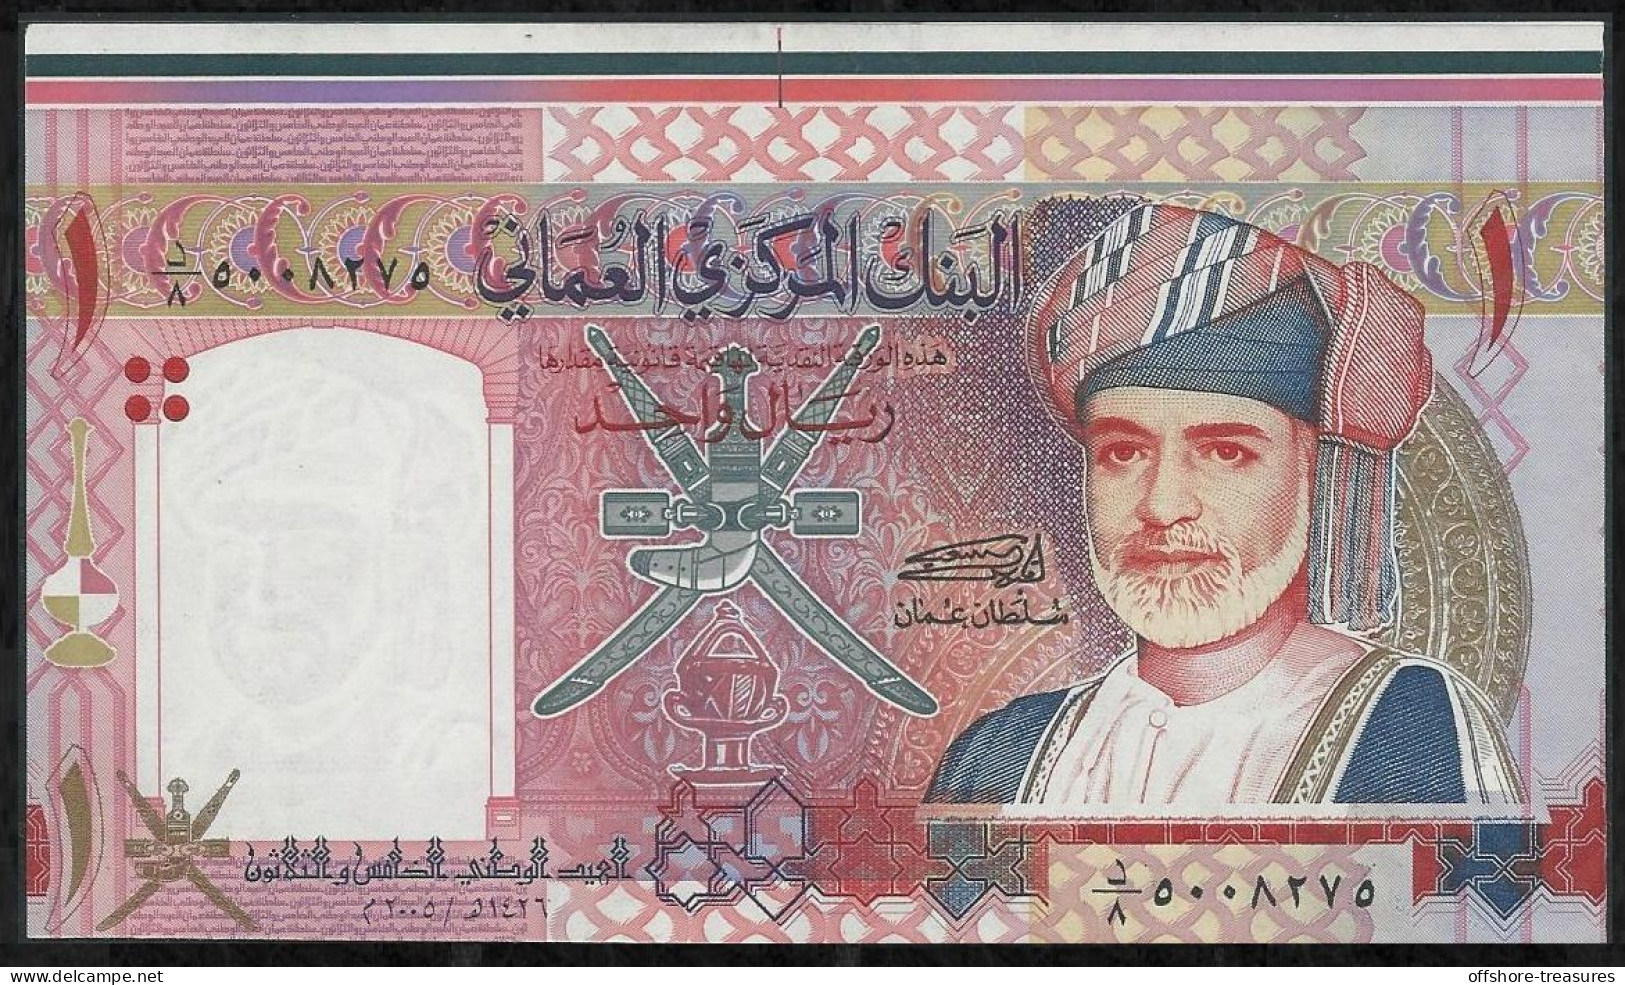 Oman Sultanate Banknote WRONG CUT ERROR RIYAL 2005 One Riyal UNC Commemorative National Day 35th Anniversary - Oman